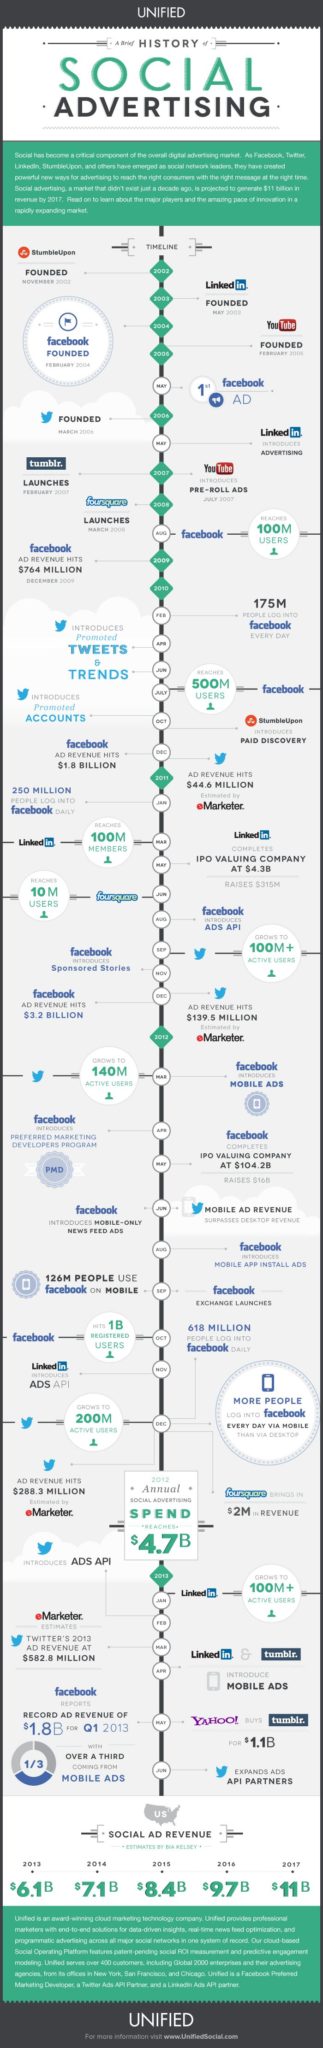 social-media-history-infographic